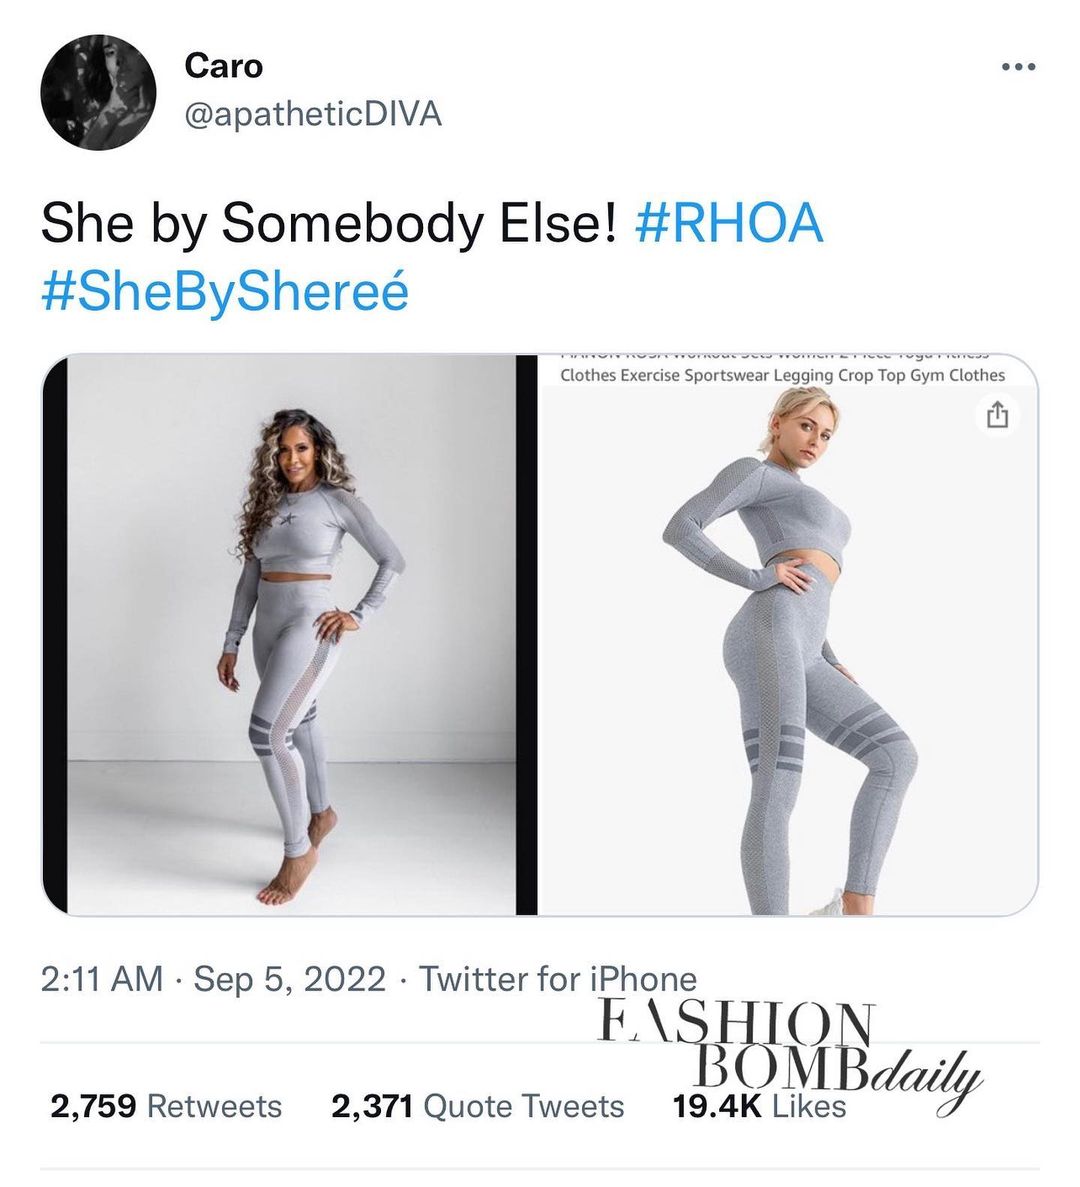 RHOA Fans Claim Shereé Whitfield's She by Shereé Brand to be